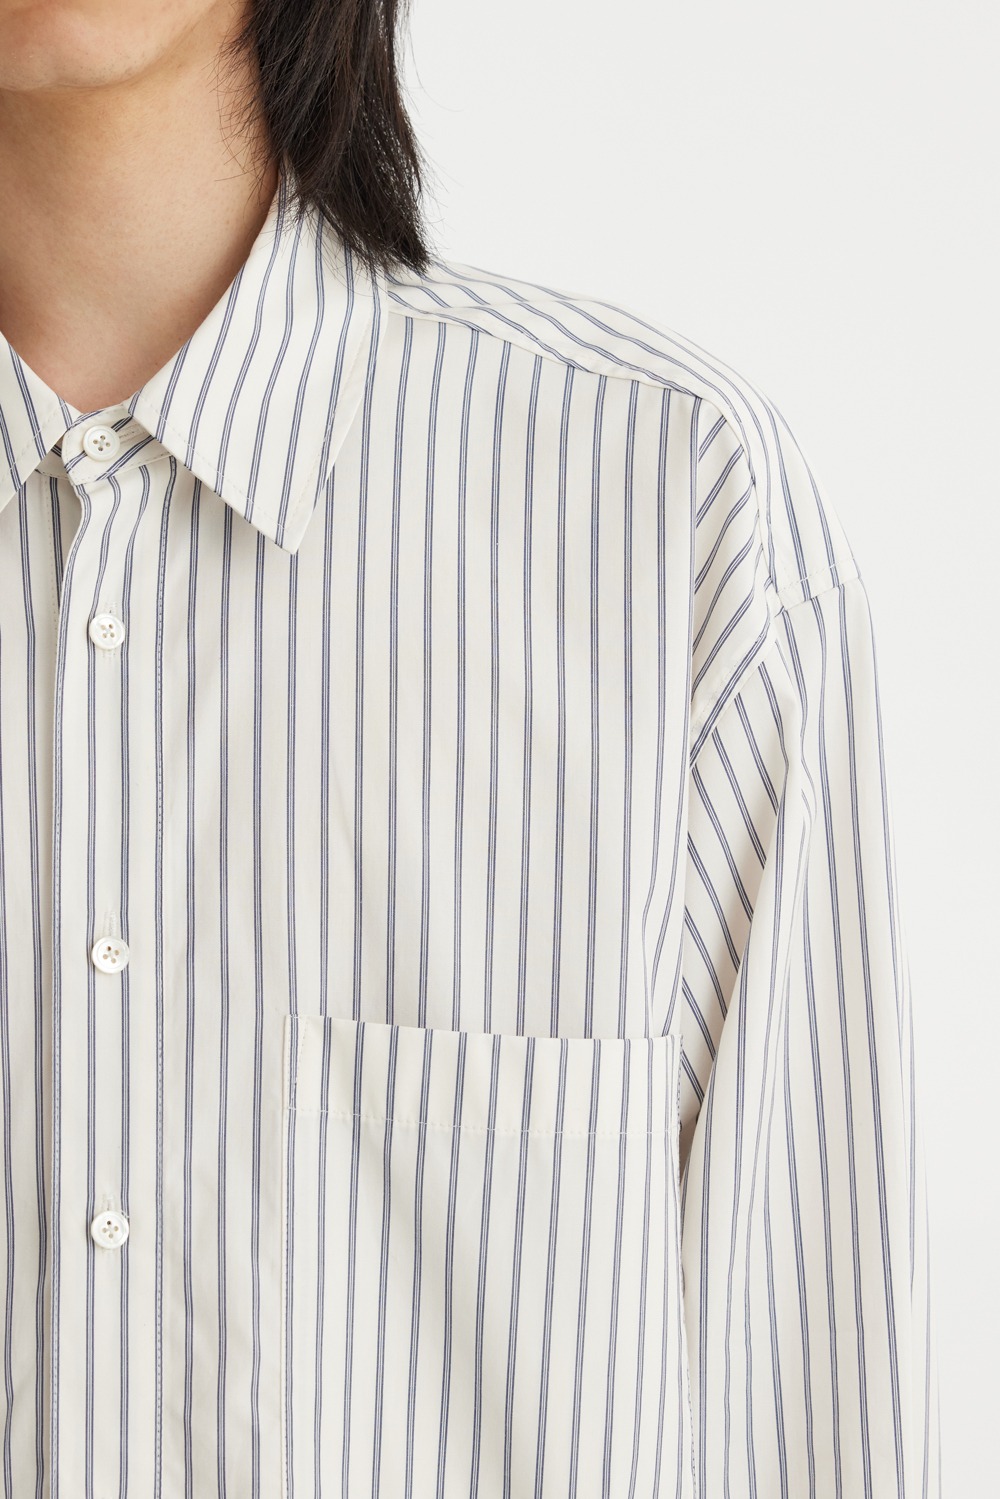 Stripe Shirt-Ivory Stripe